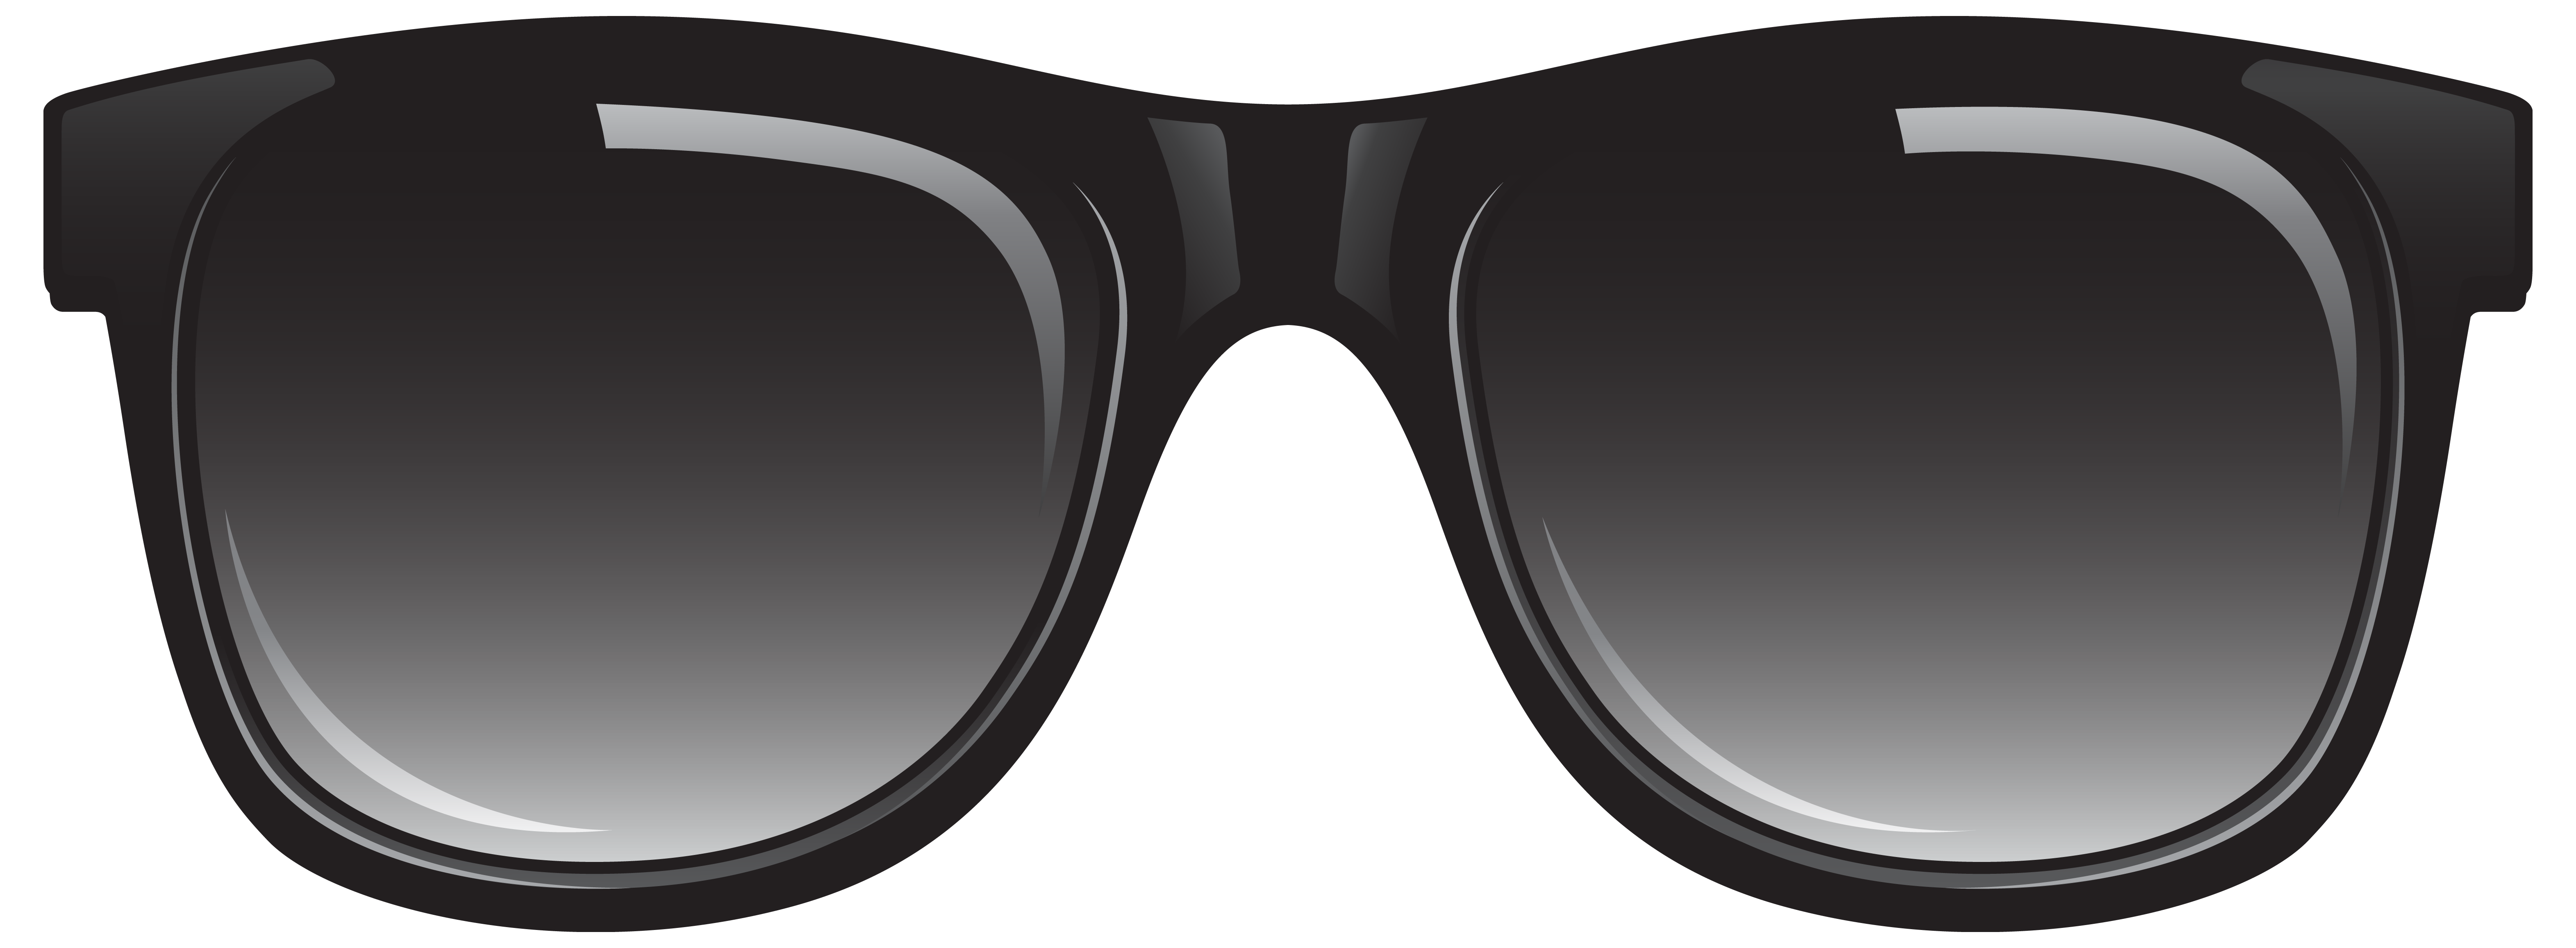 jay-round-classic-mirrored-lens-women-s-retro-frame-sunglasses